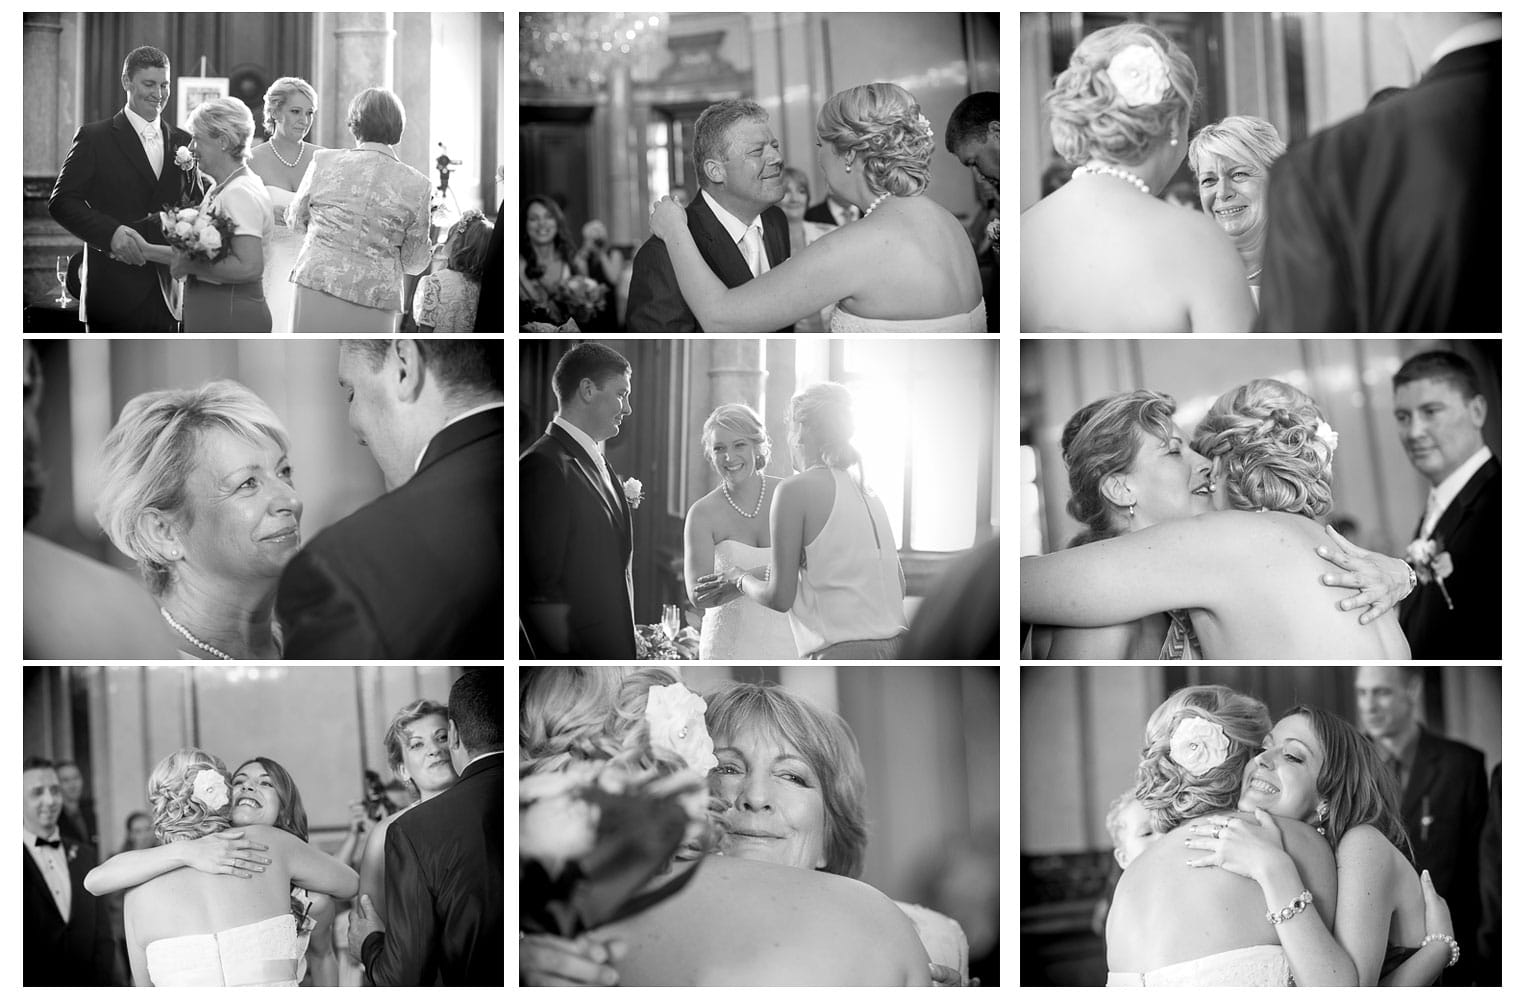 Chateau Liblice wedding / Jana & Kym wedding photography